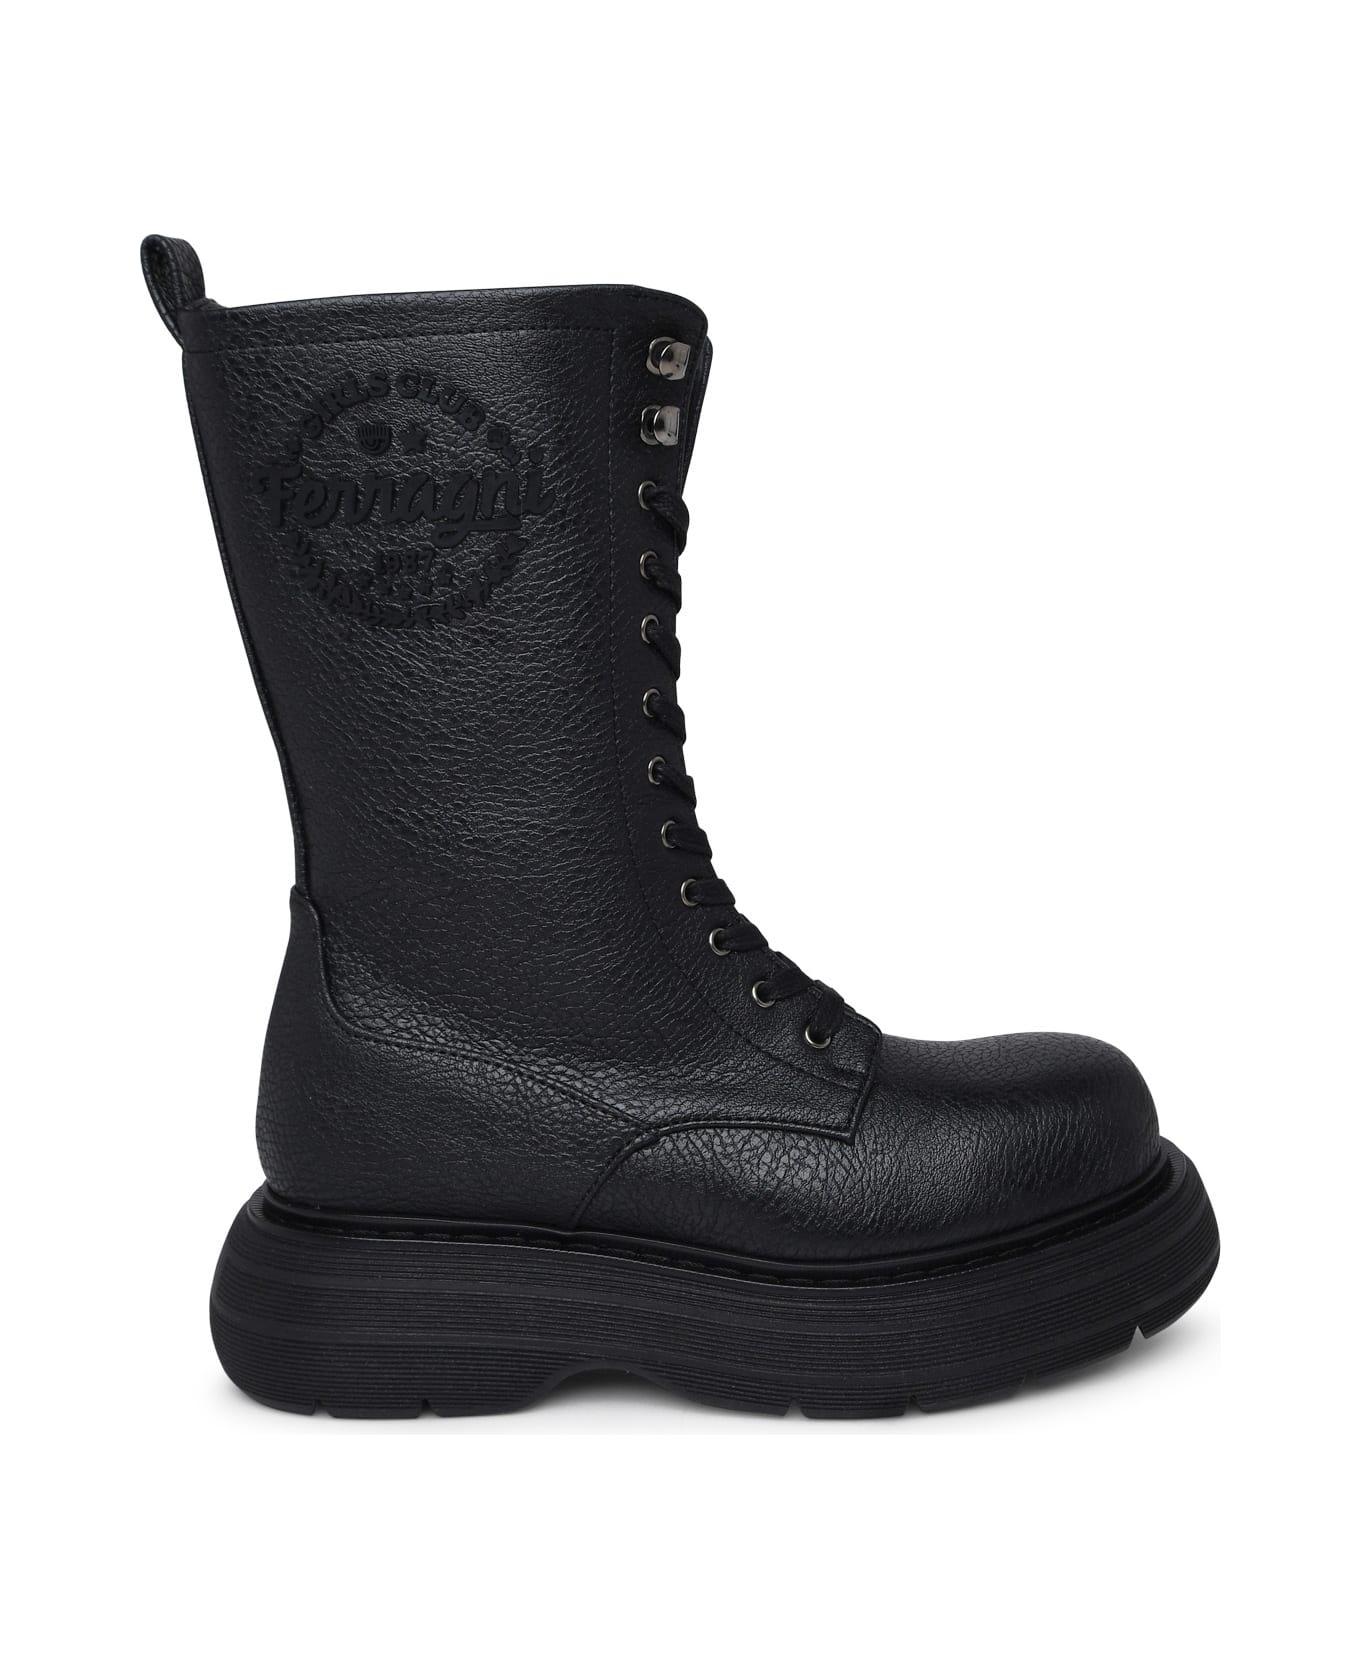 Chiara Ferragni 'ghirls' Black Hammered Leather Amphibious Boots - Black